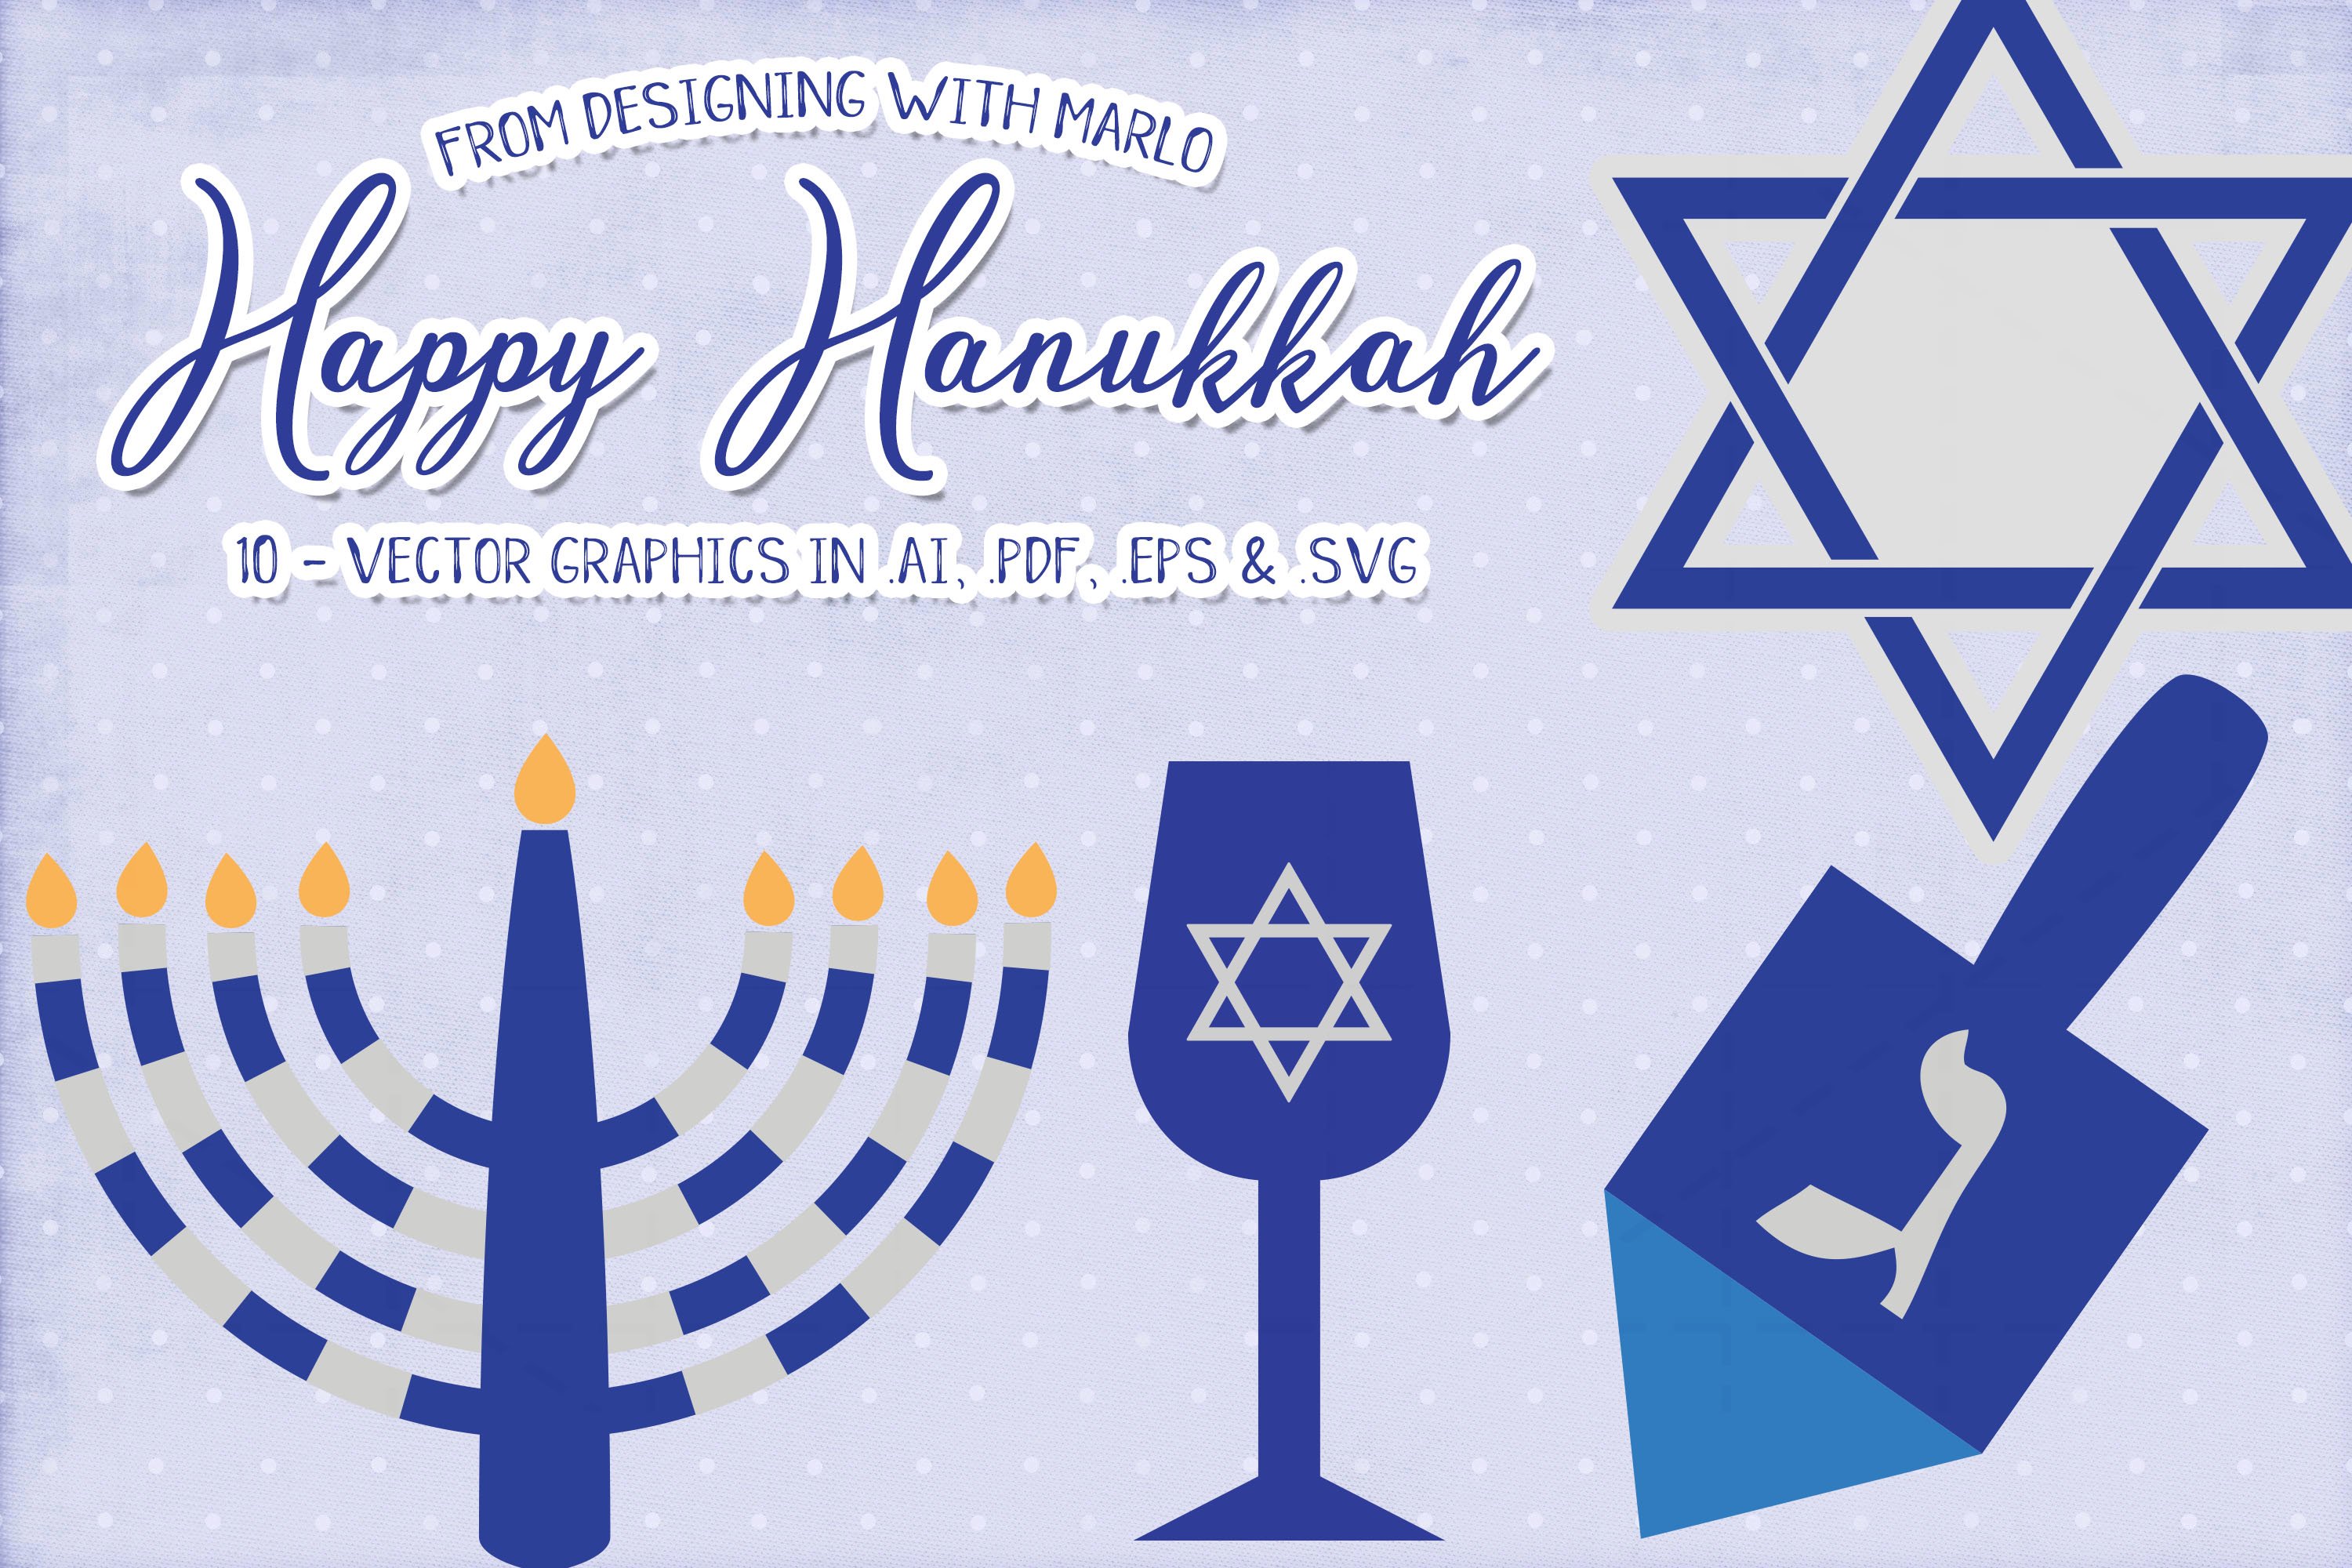 Hanukkah themed blue images.